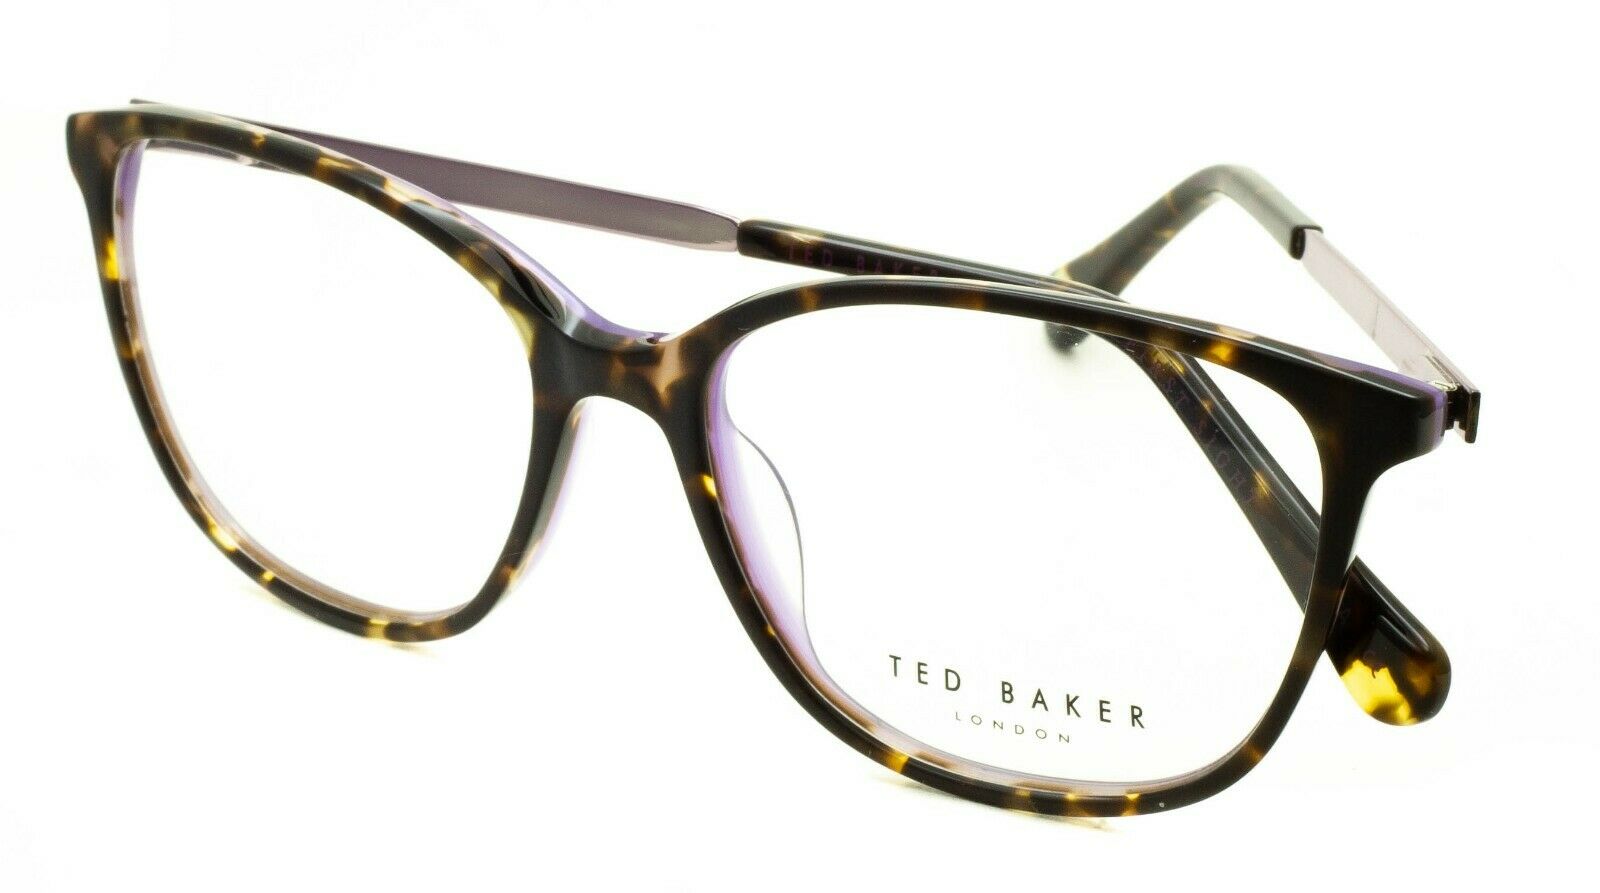 TED BAKER 9096 791 Cata 53mm Eyewear FRAMES Glasses Eyeglasses RX Optical - New